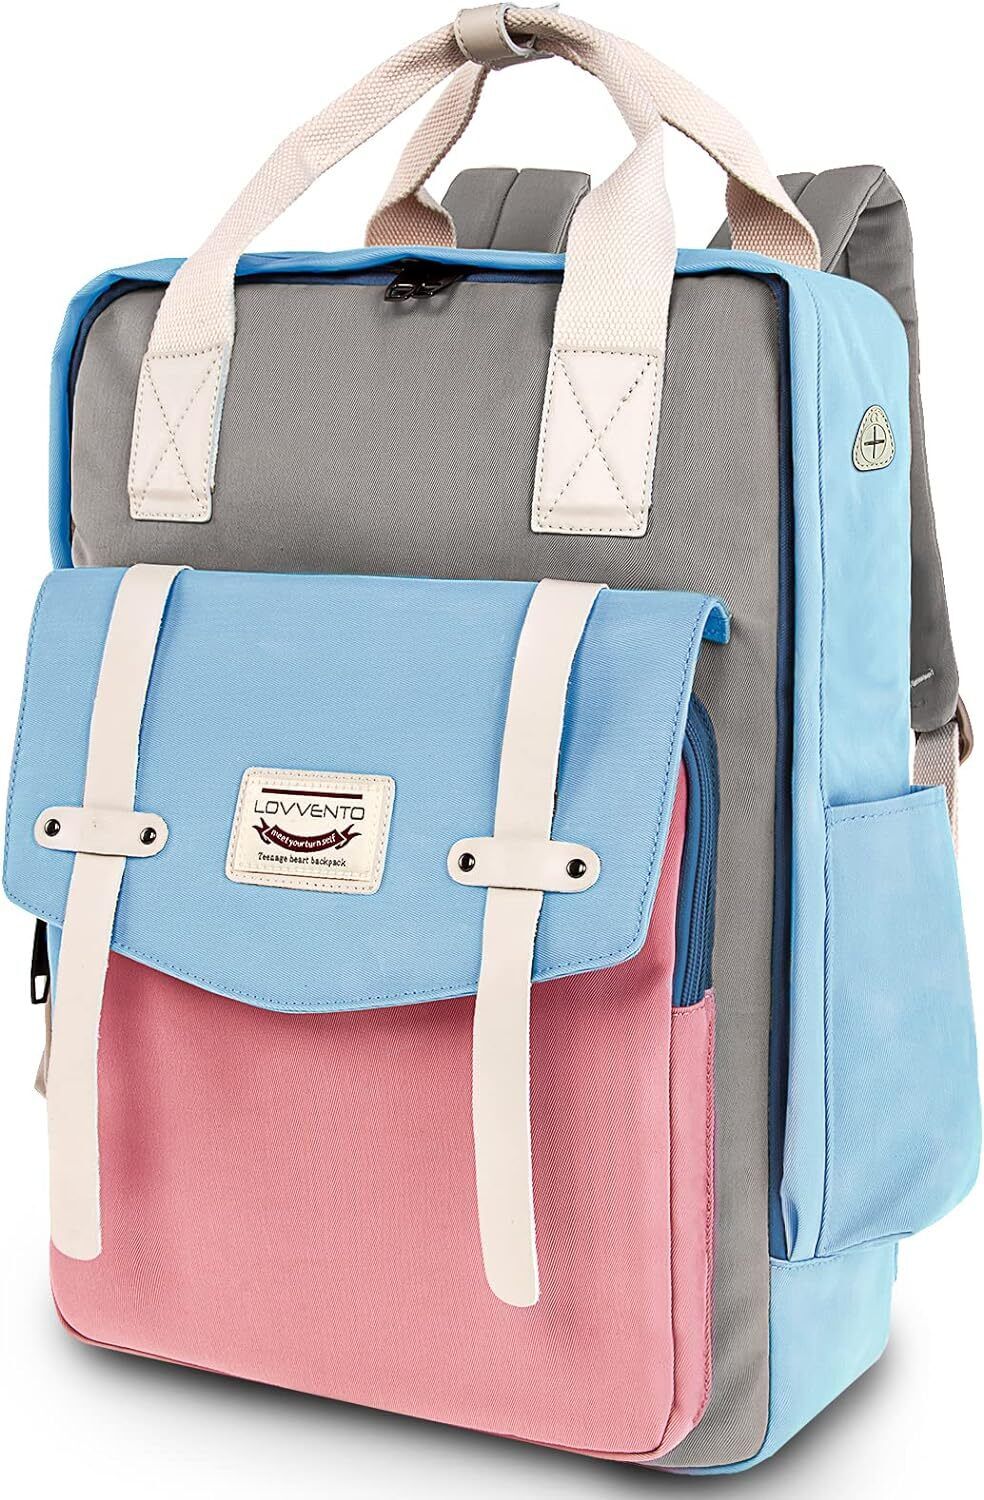 Lovvento 15.6 inch Laptop Japanese Backpack Travel Bag College 1-pink Blue 